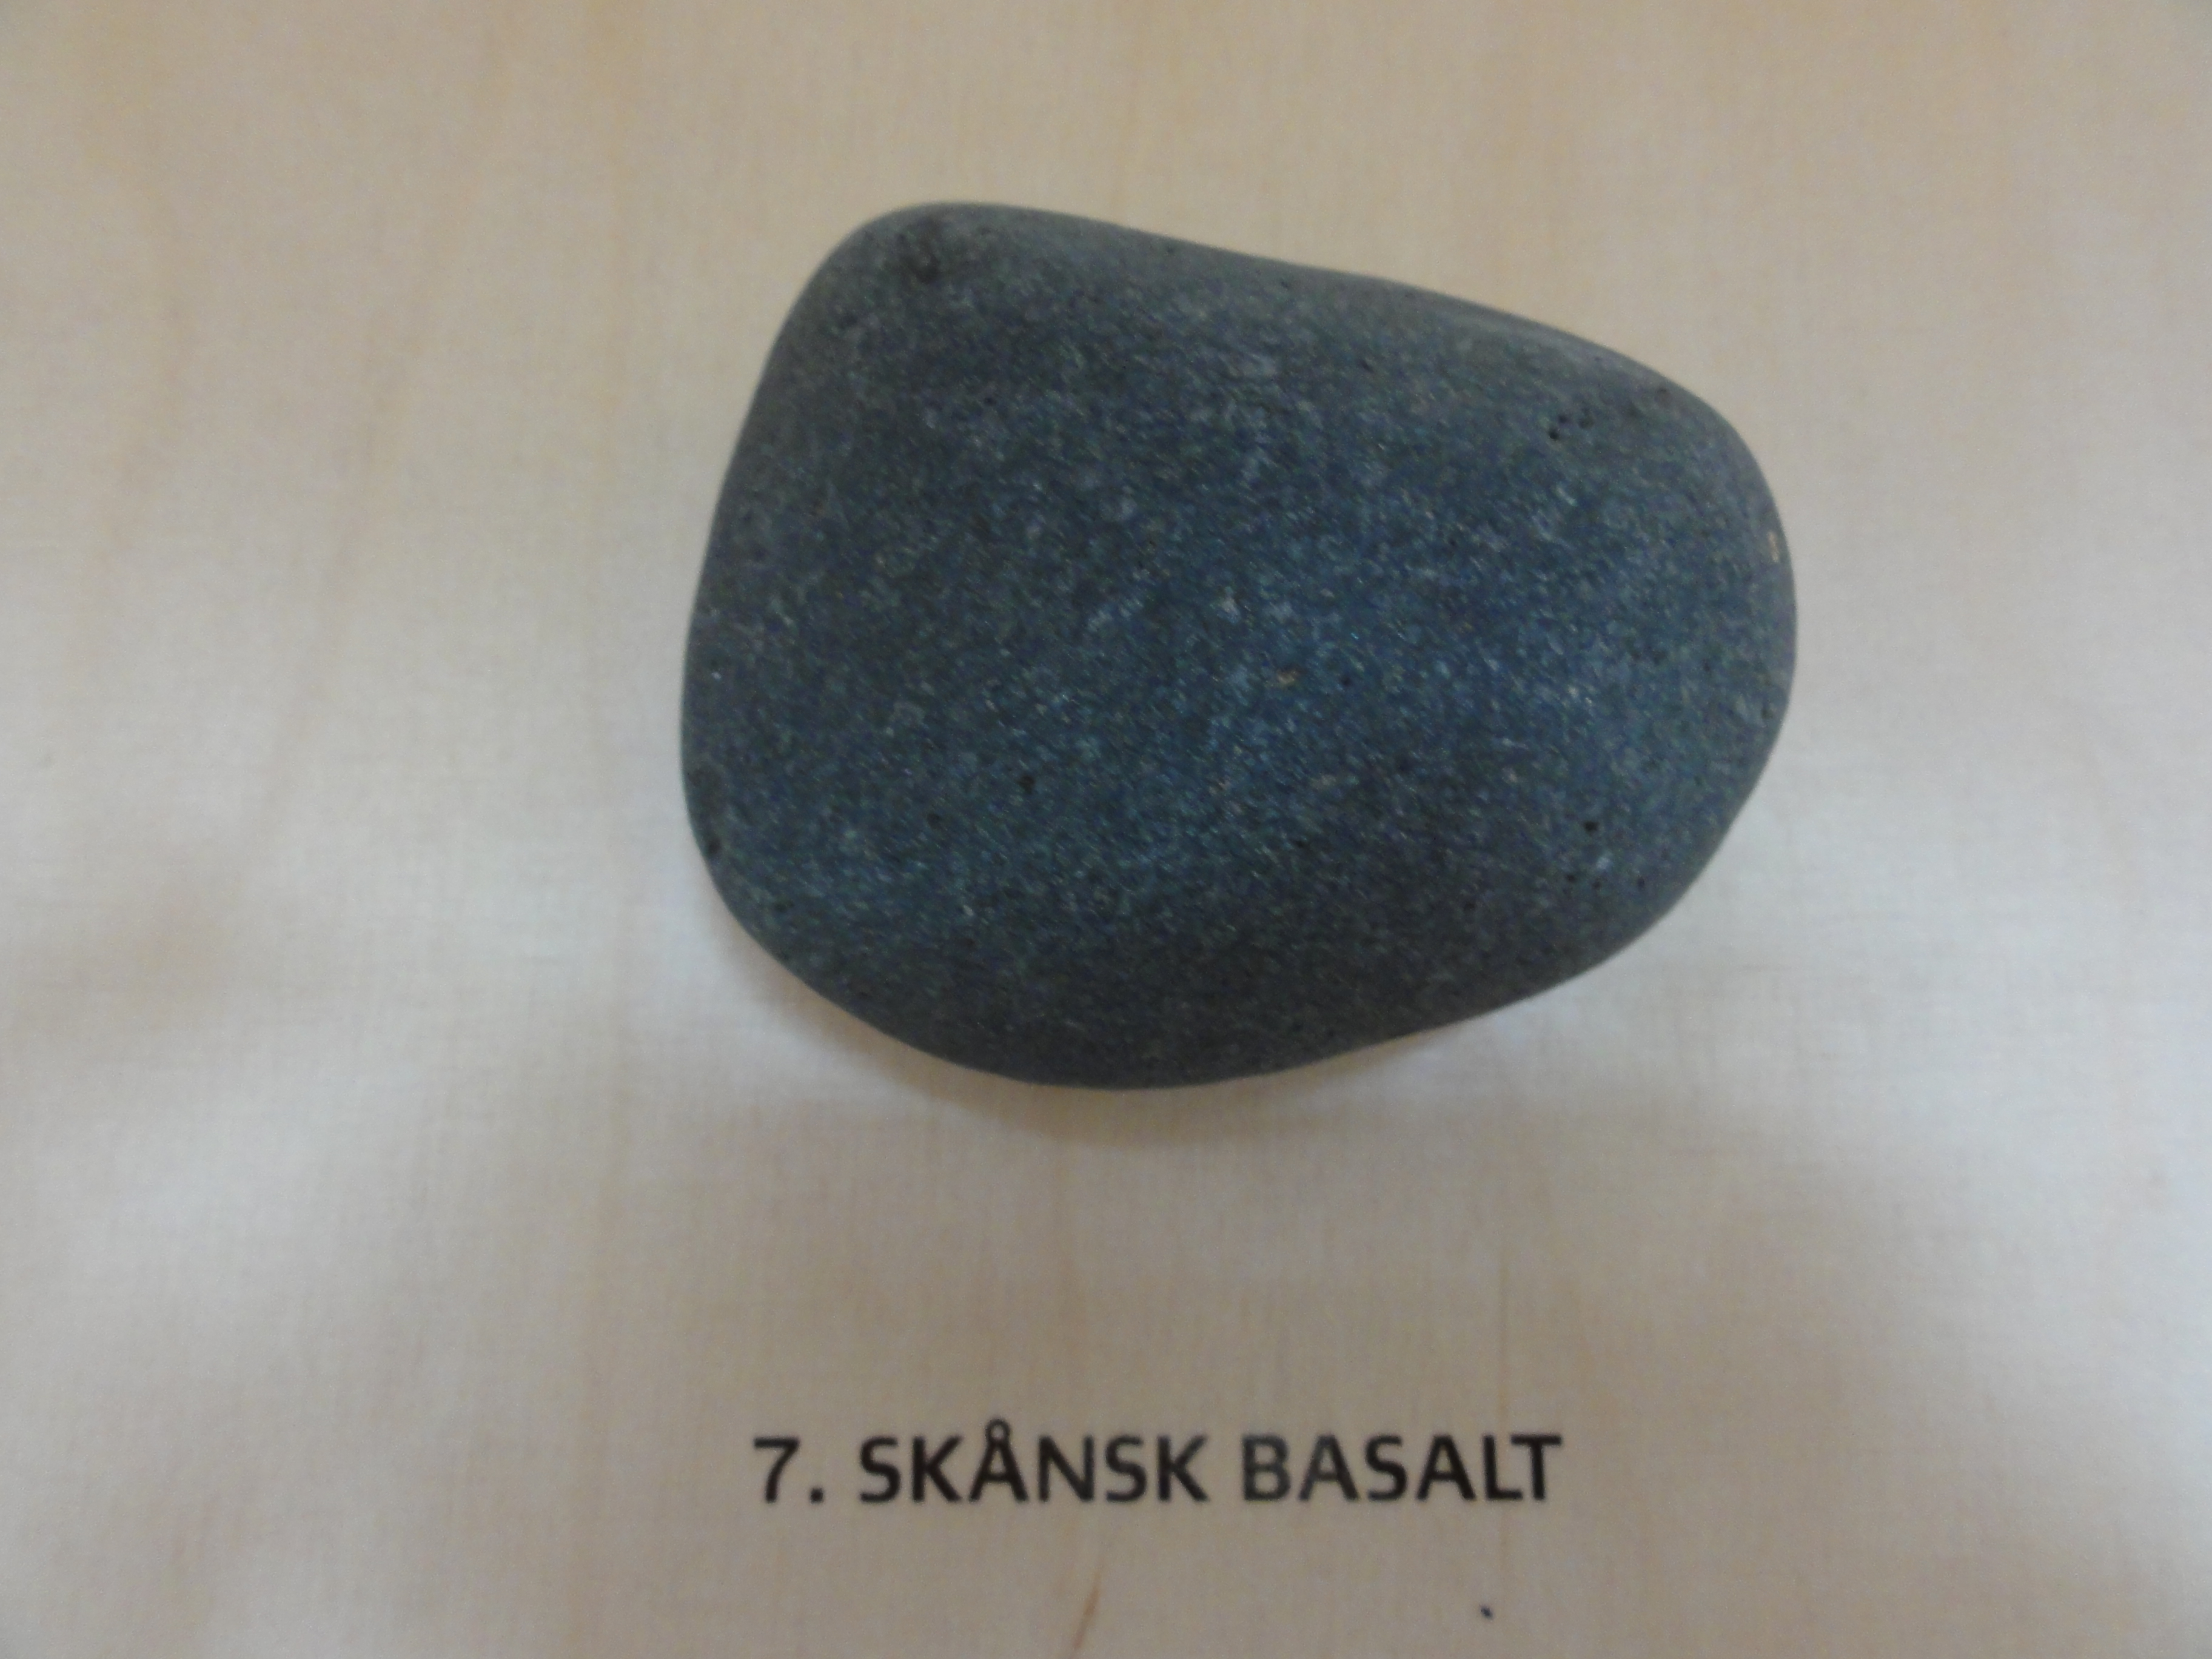 7. Skånsk basalt